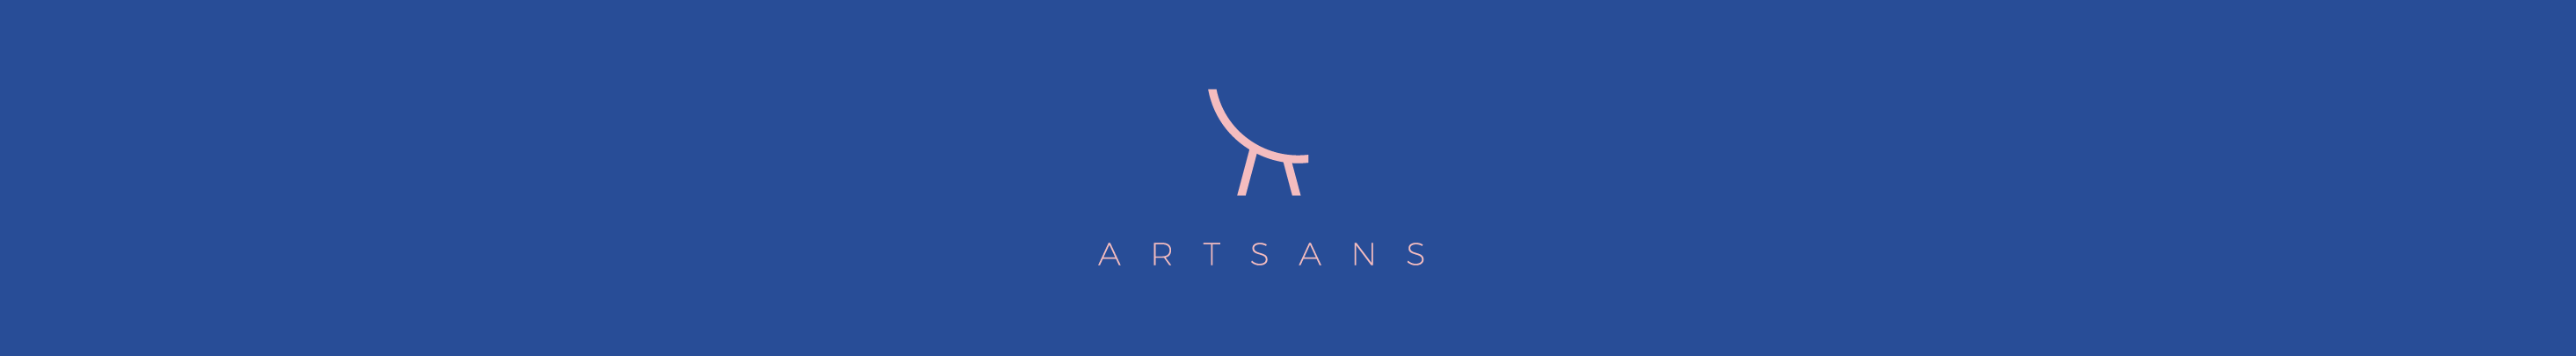 artsans logo4b